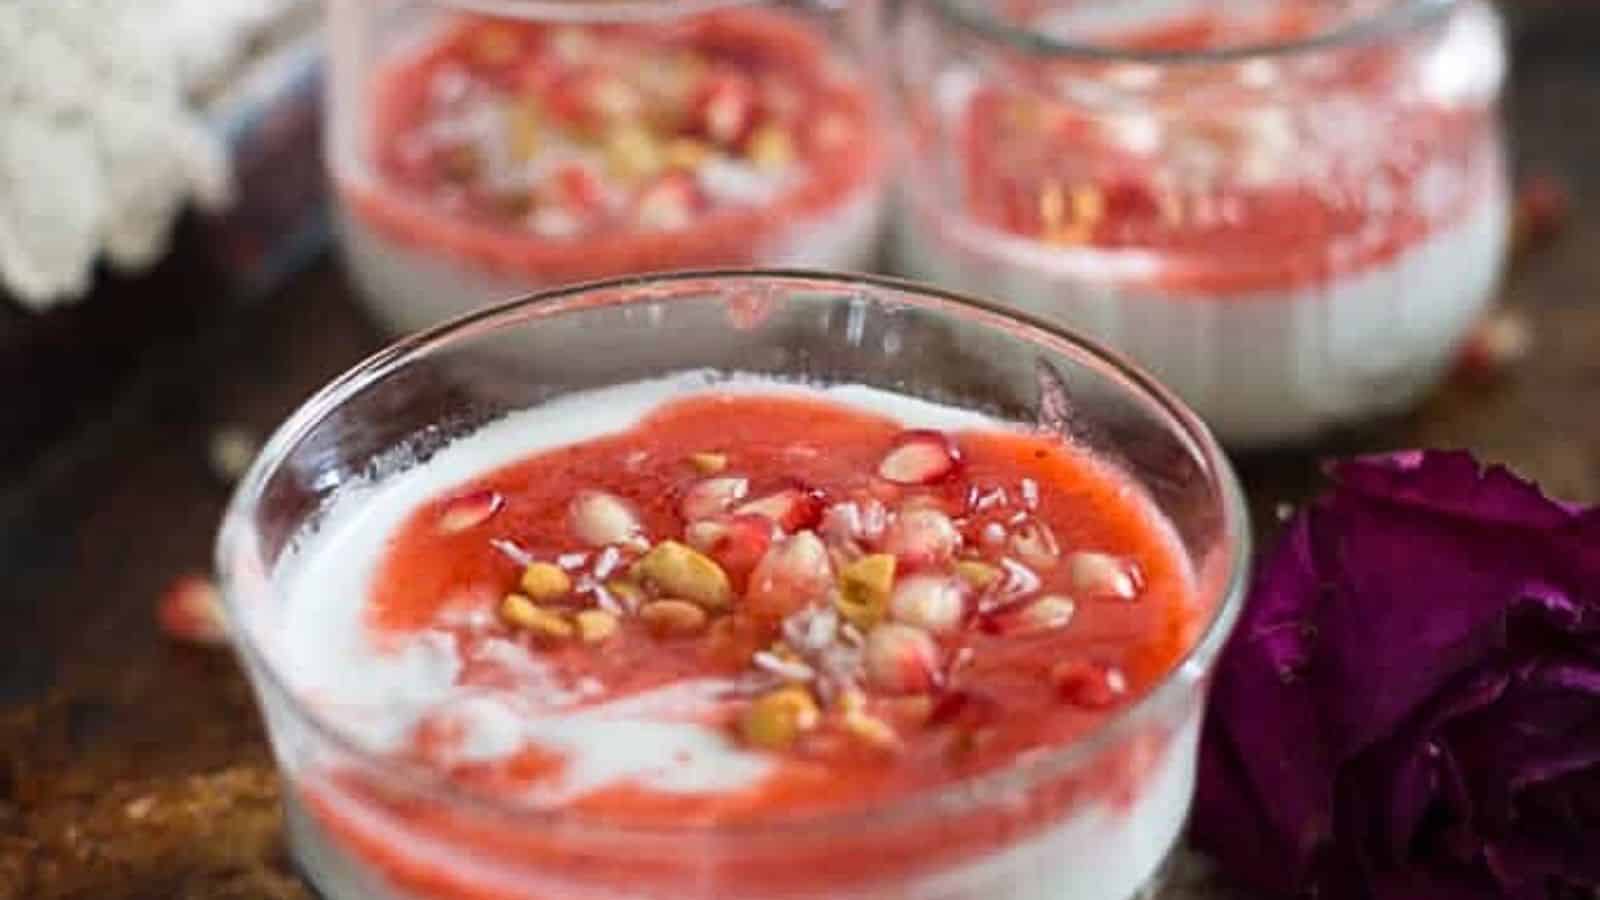 A glass of pomegranate yogurt with pomegranate seeds.